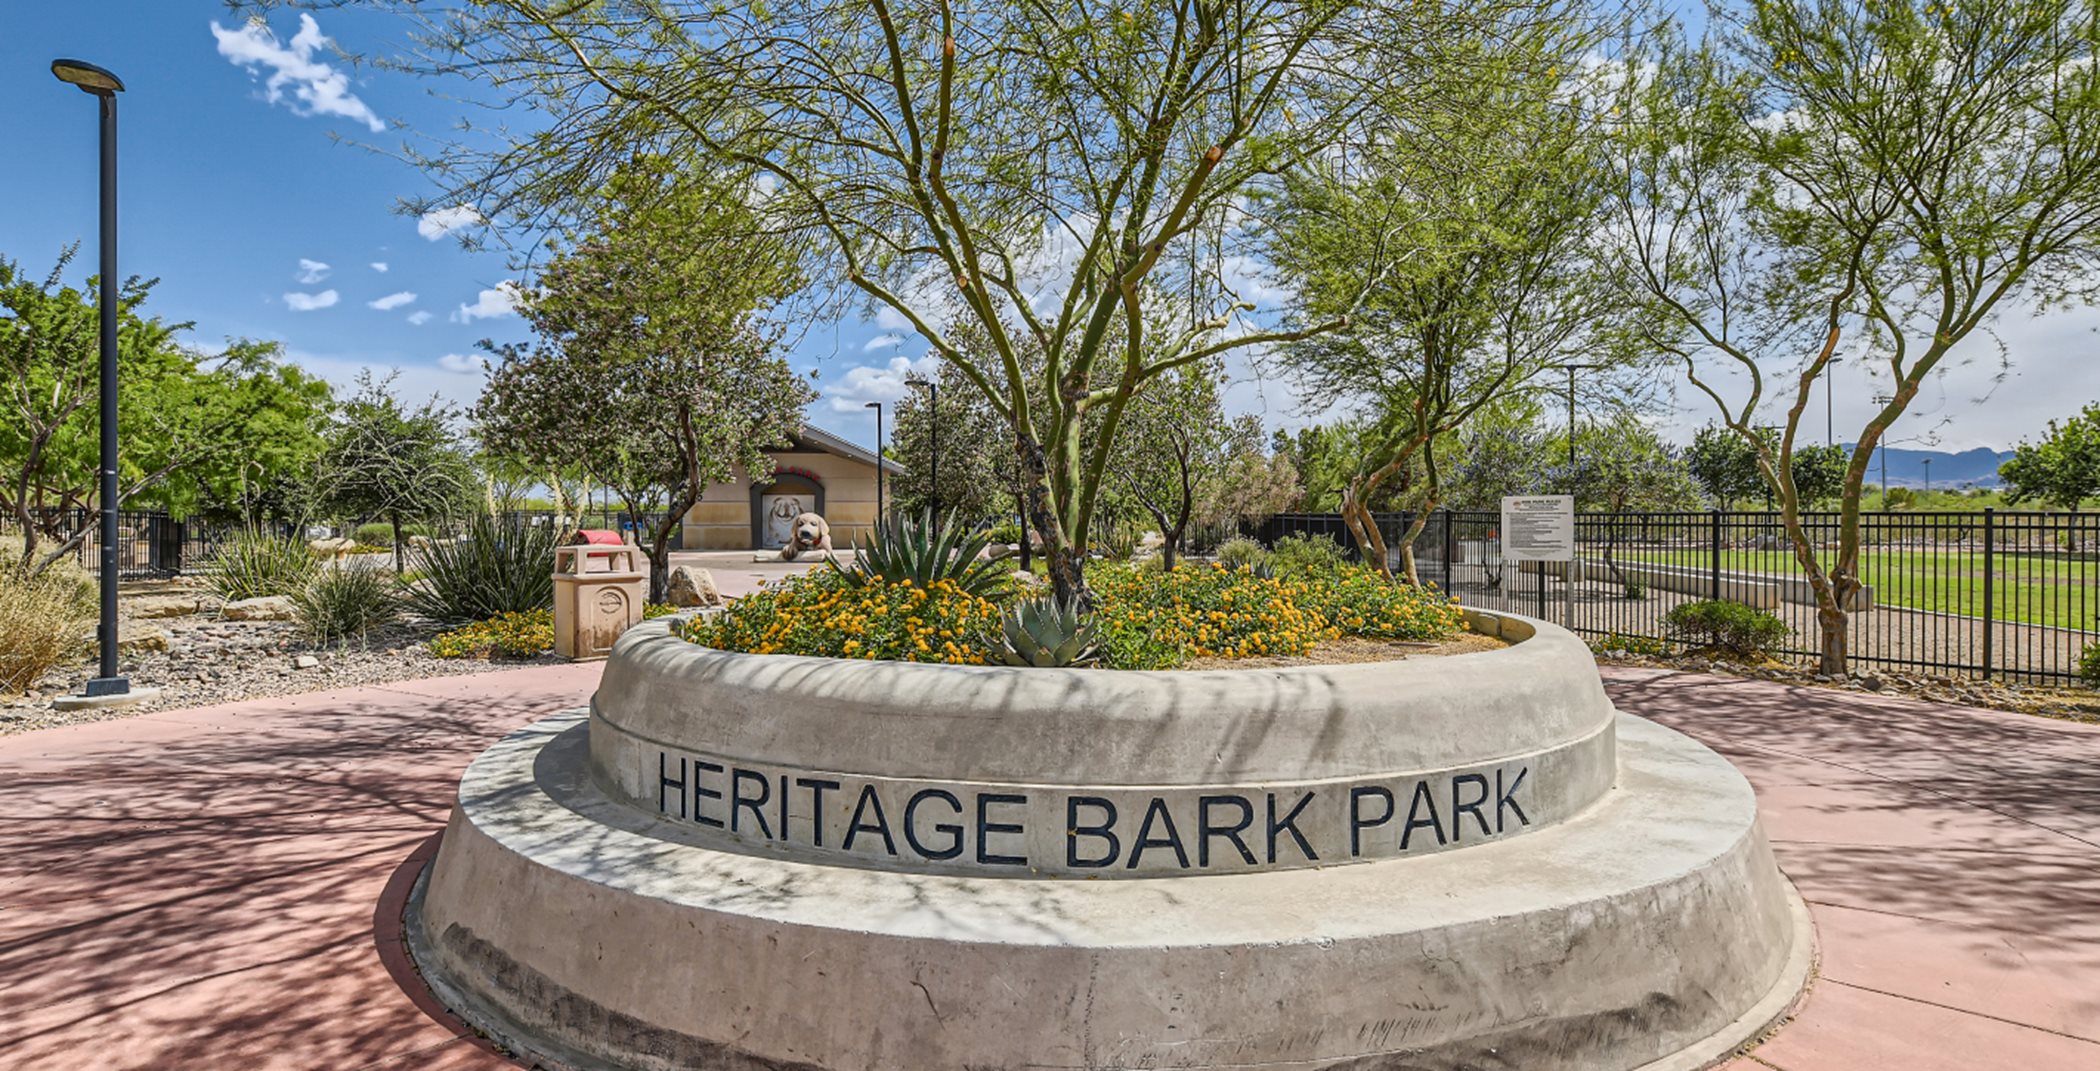 Heritage Bark Park circular bench/planter